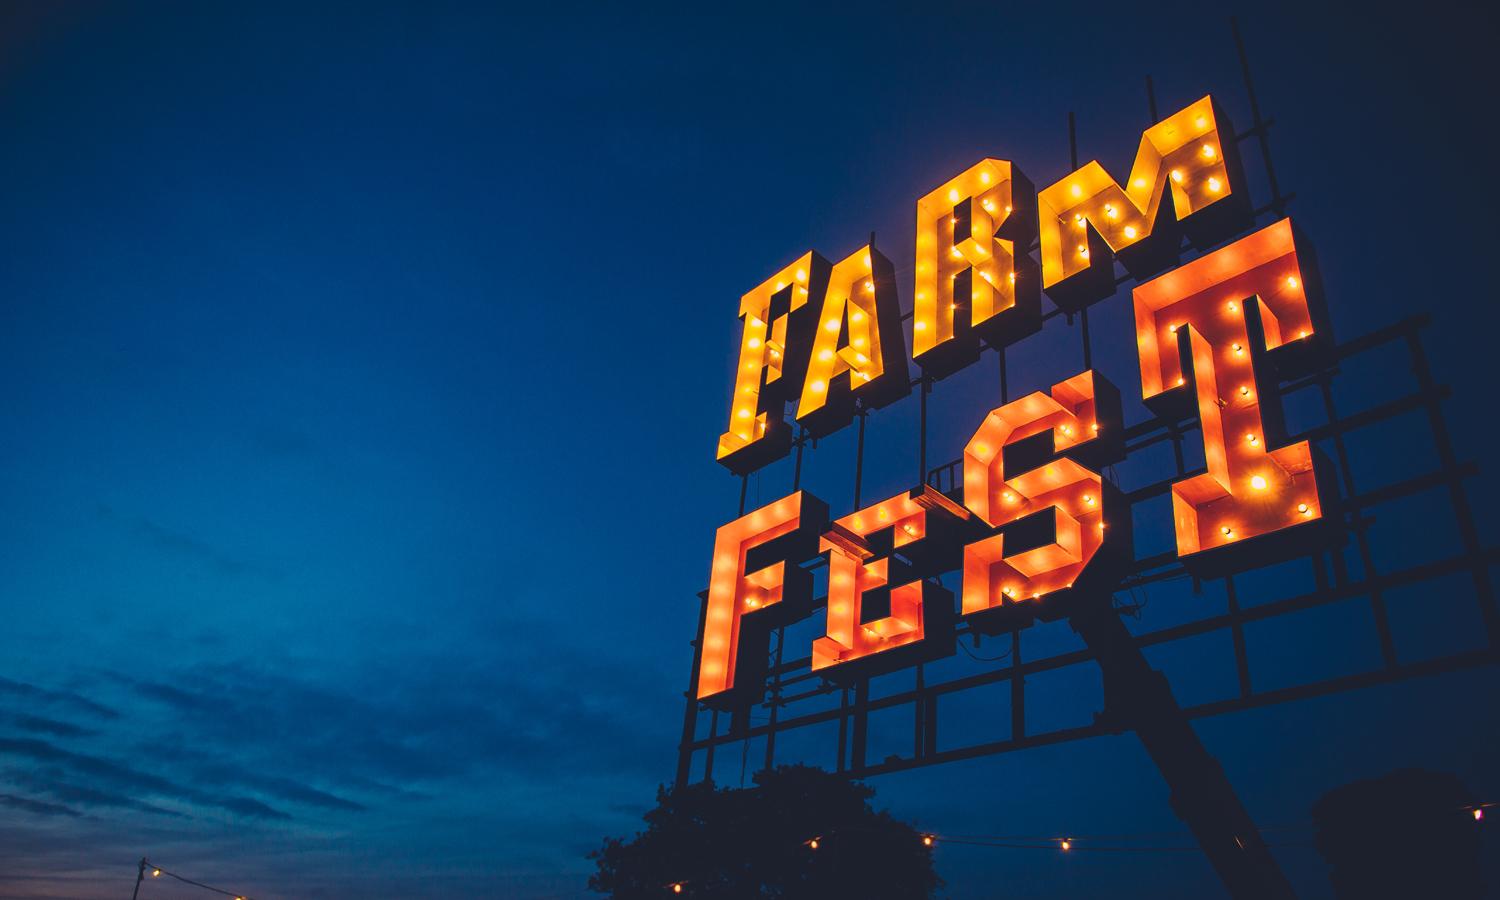 Farmfest returns